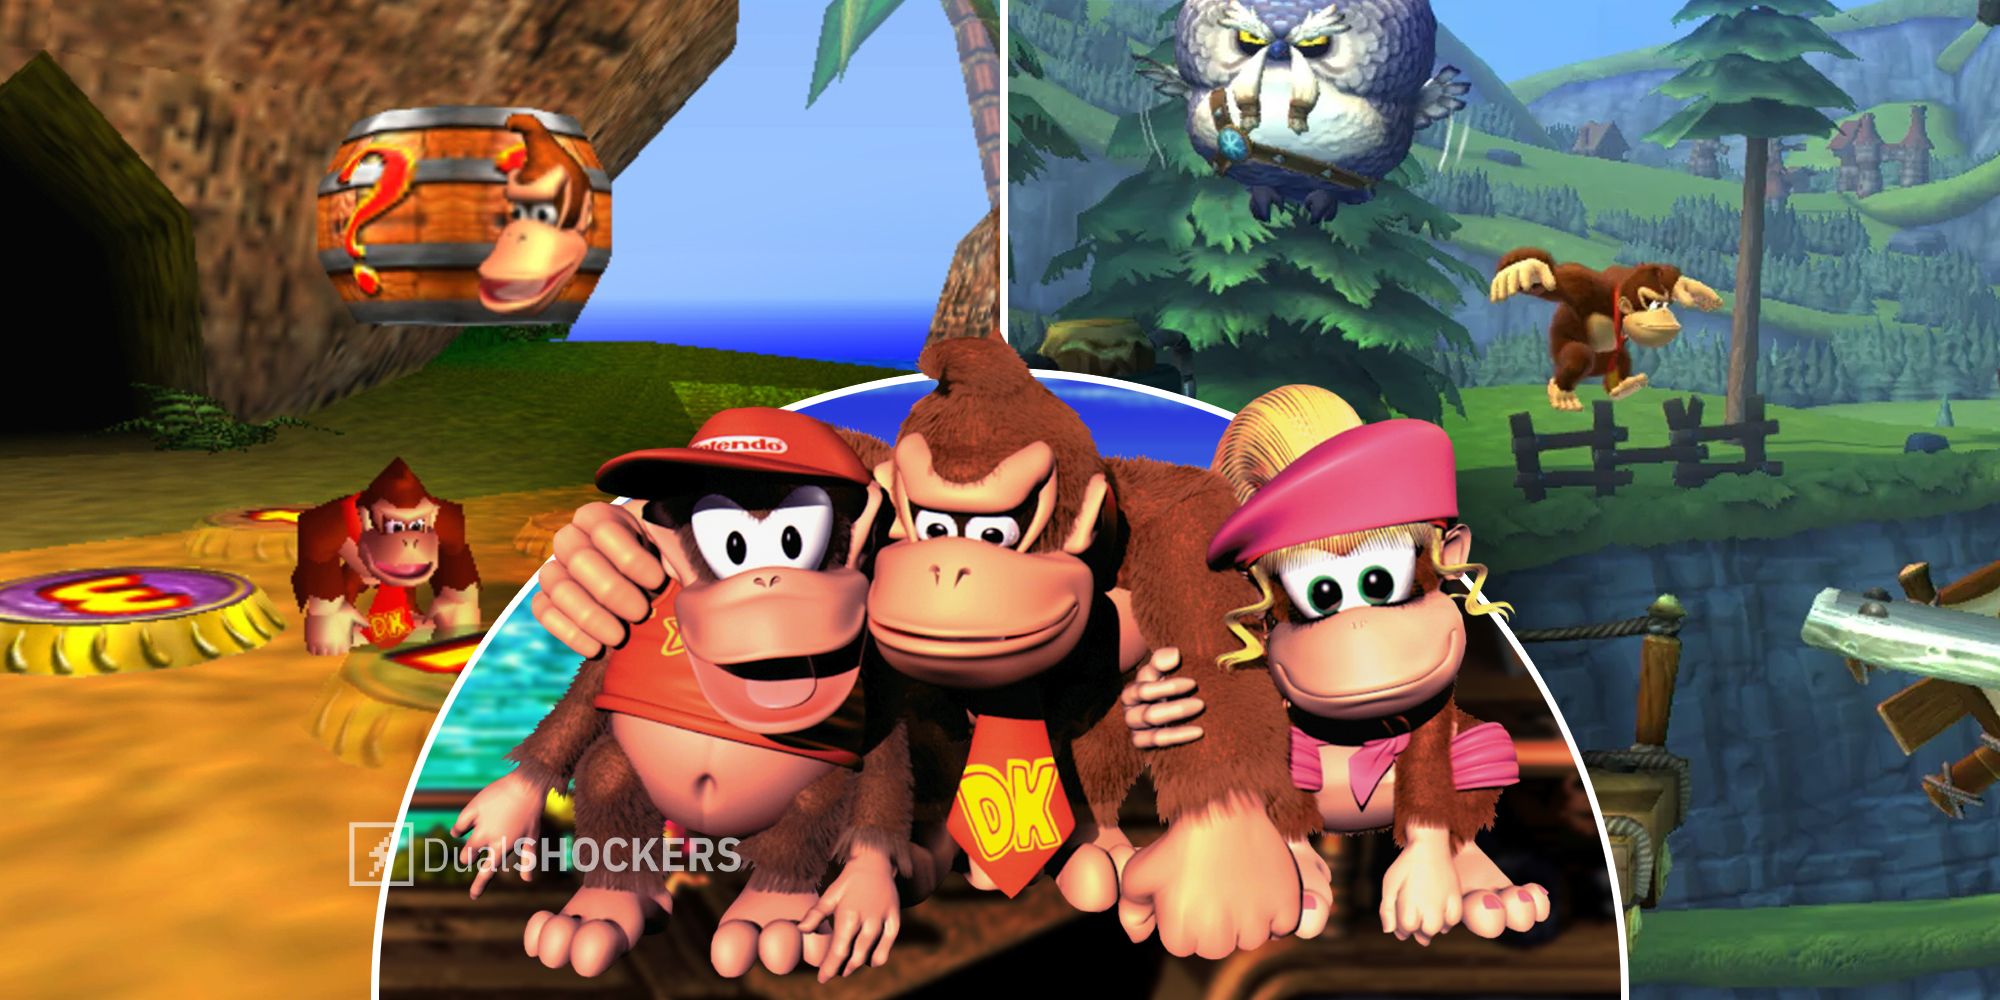 Donkey Kong 64, Donkey Kong Country 2, Donkey Kong Country: Tropical Freeze